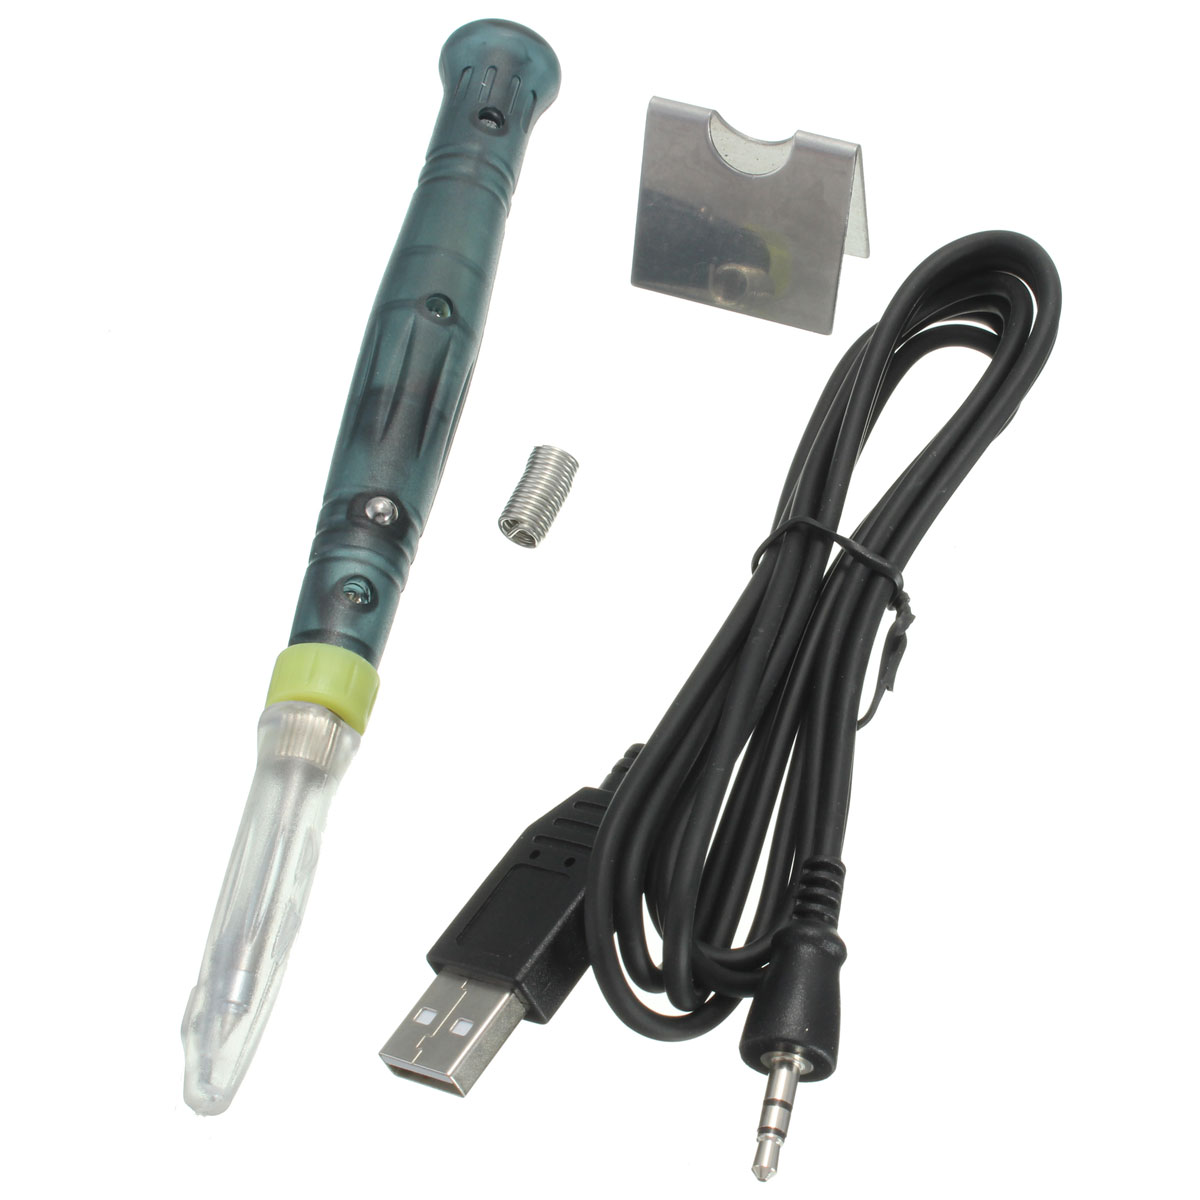 DANIU-Portable-USB-Powered-Mini-5V-8W-Electric-Soldering-Iron-With-LED-Indicator-1017109-3